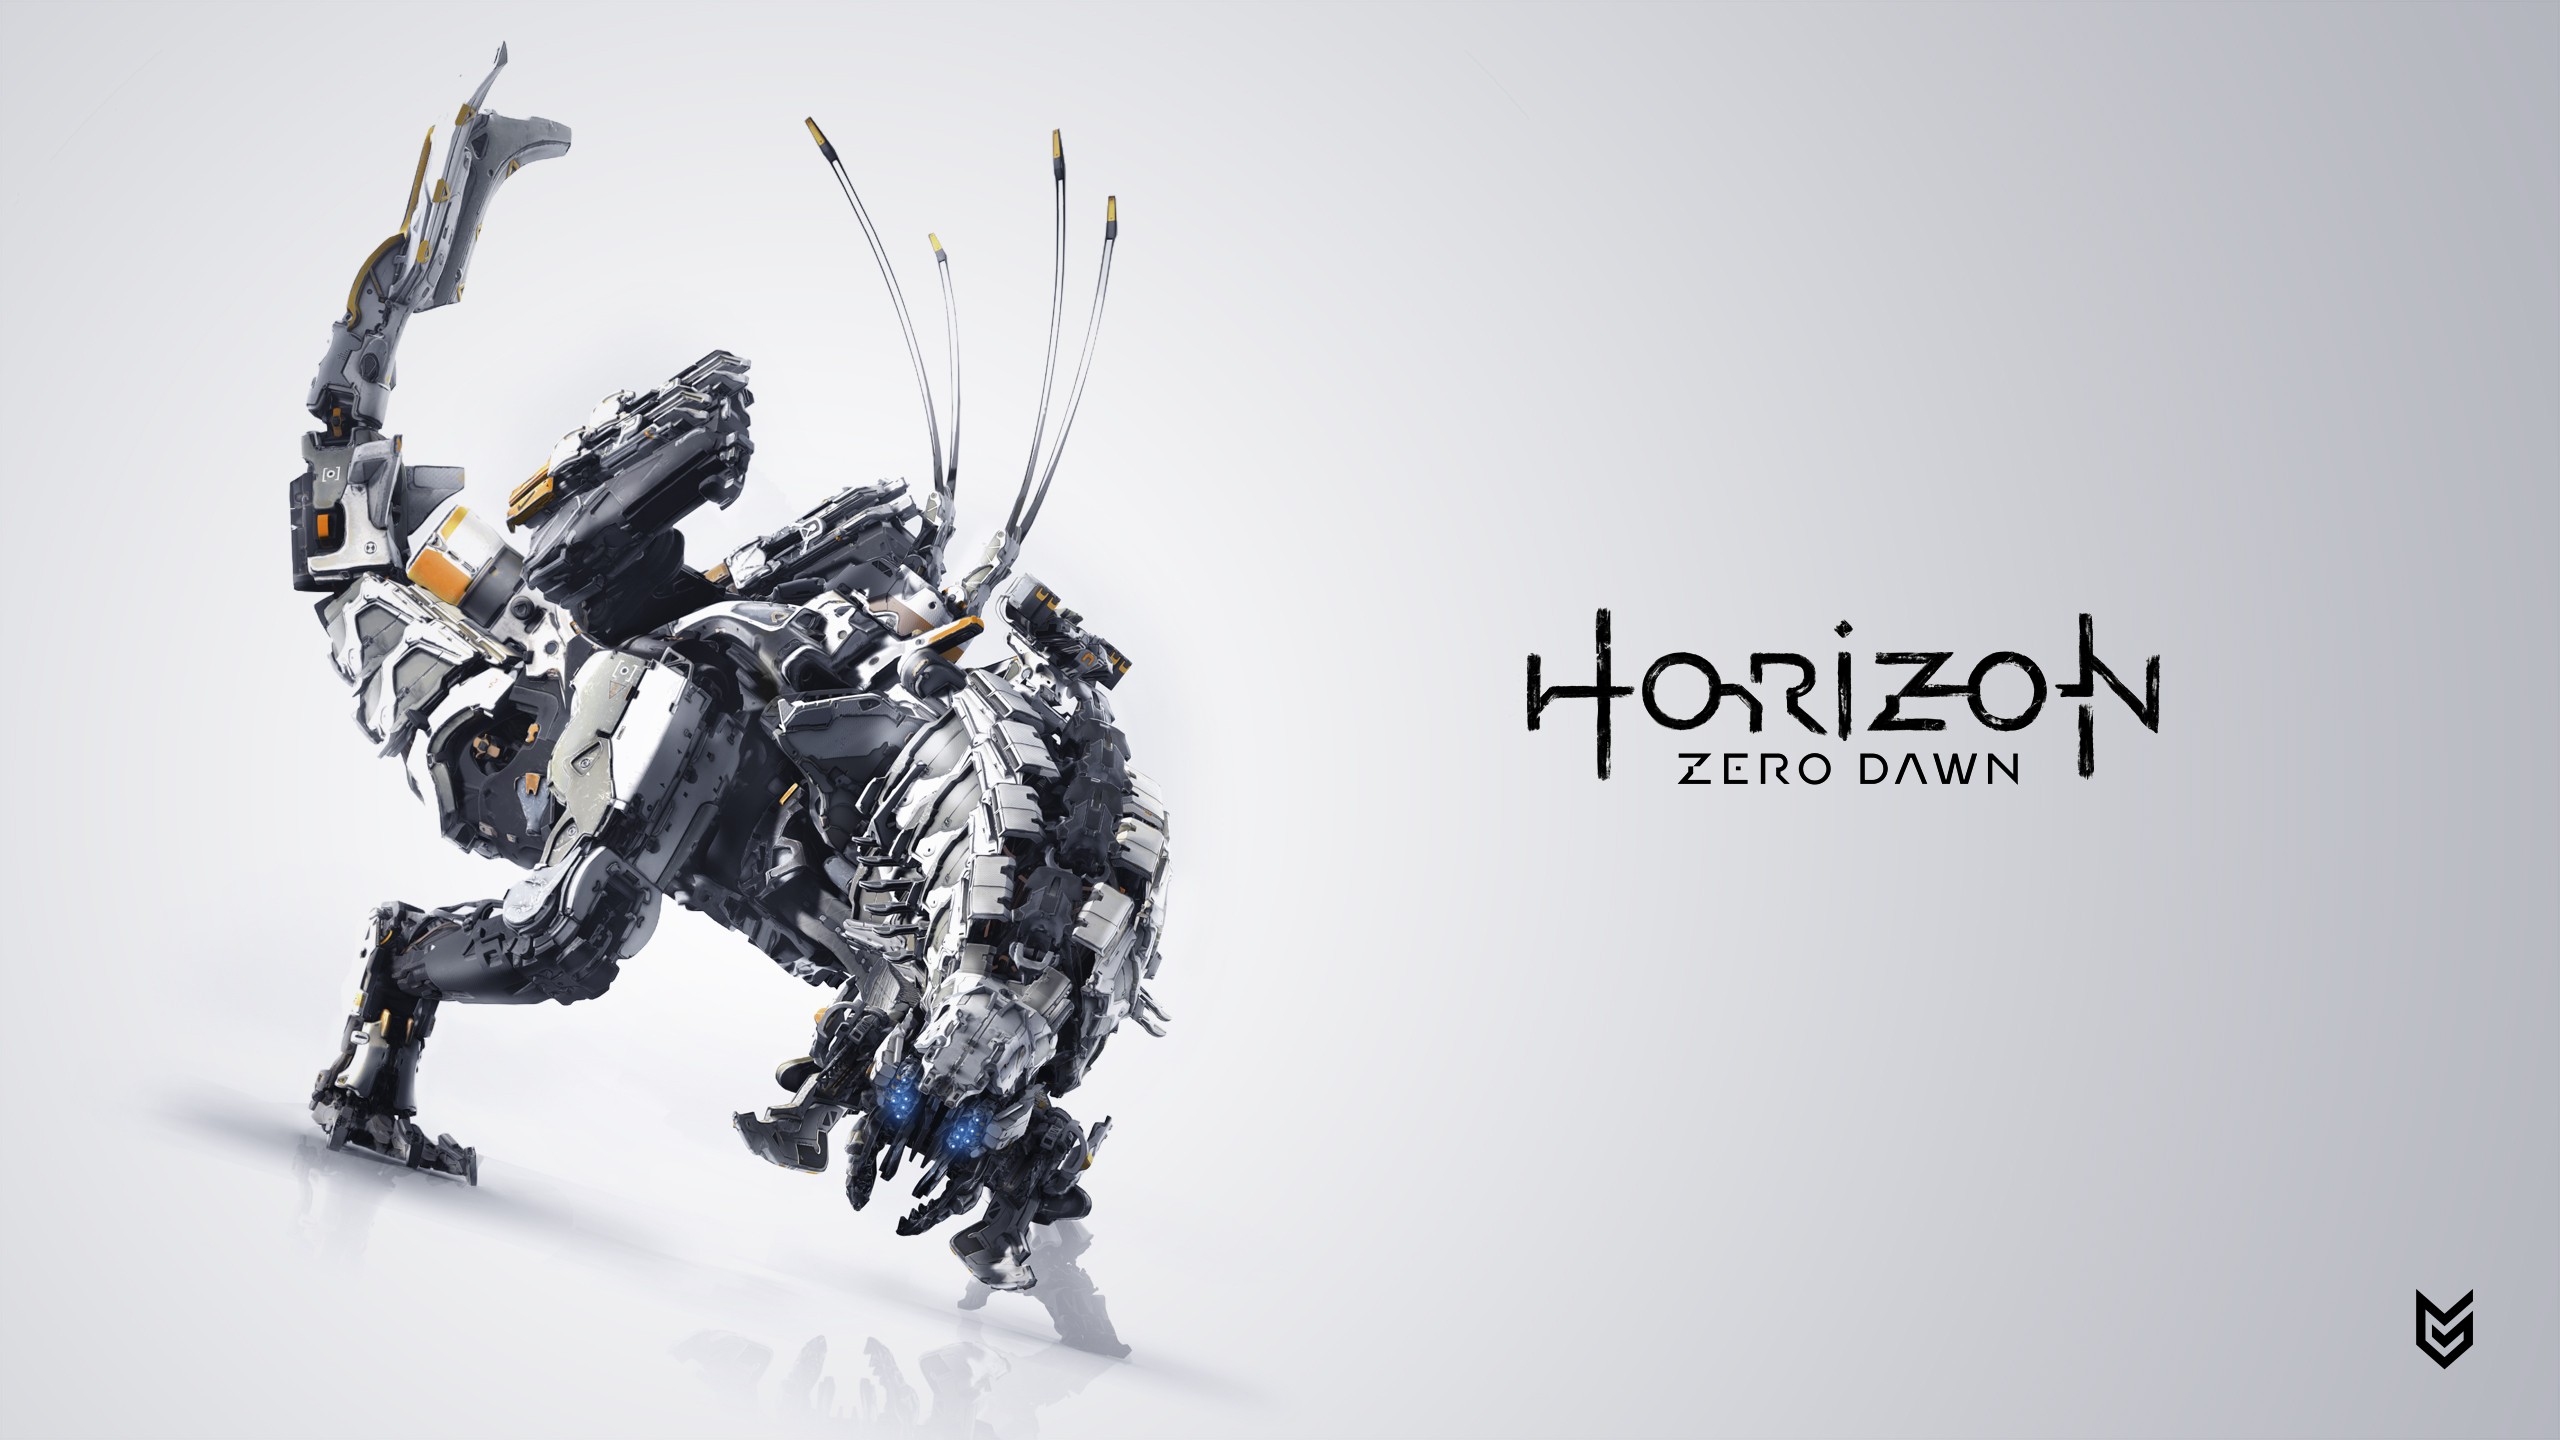 Horizon Zero Dawn Wallpapers - PS4 Home - 2560 x 1440 jpeg 731kB